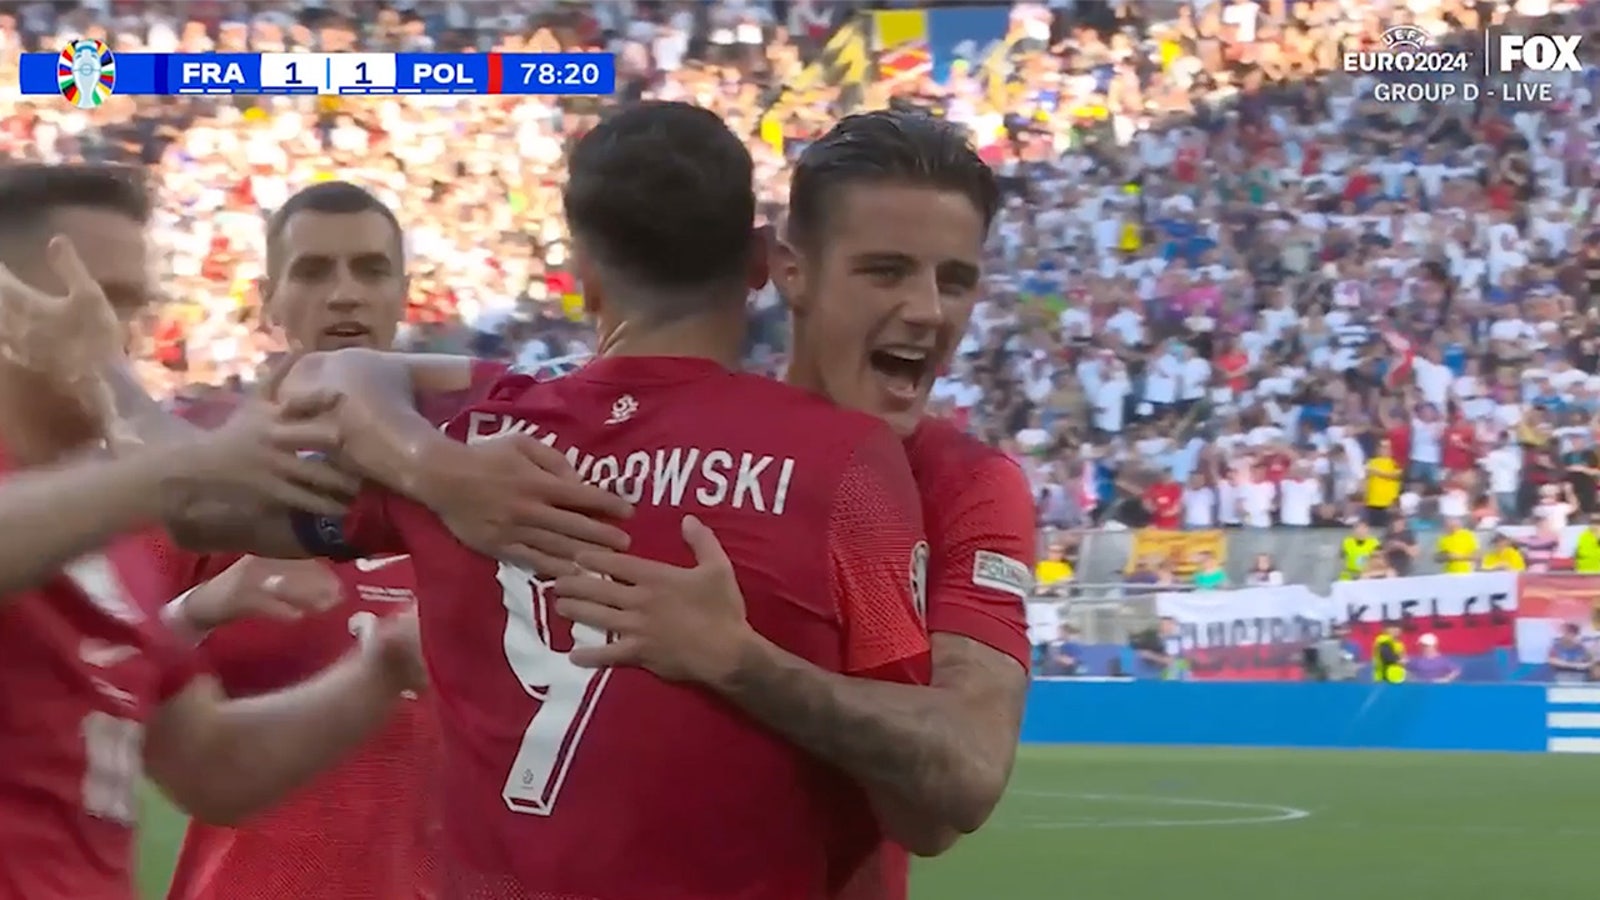 Poland scores the game-tying goal after Robert Lewandowski's penalty kick 